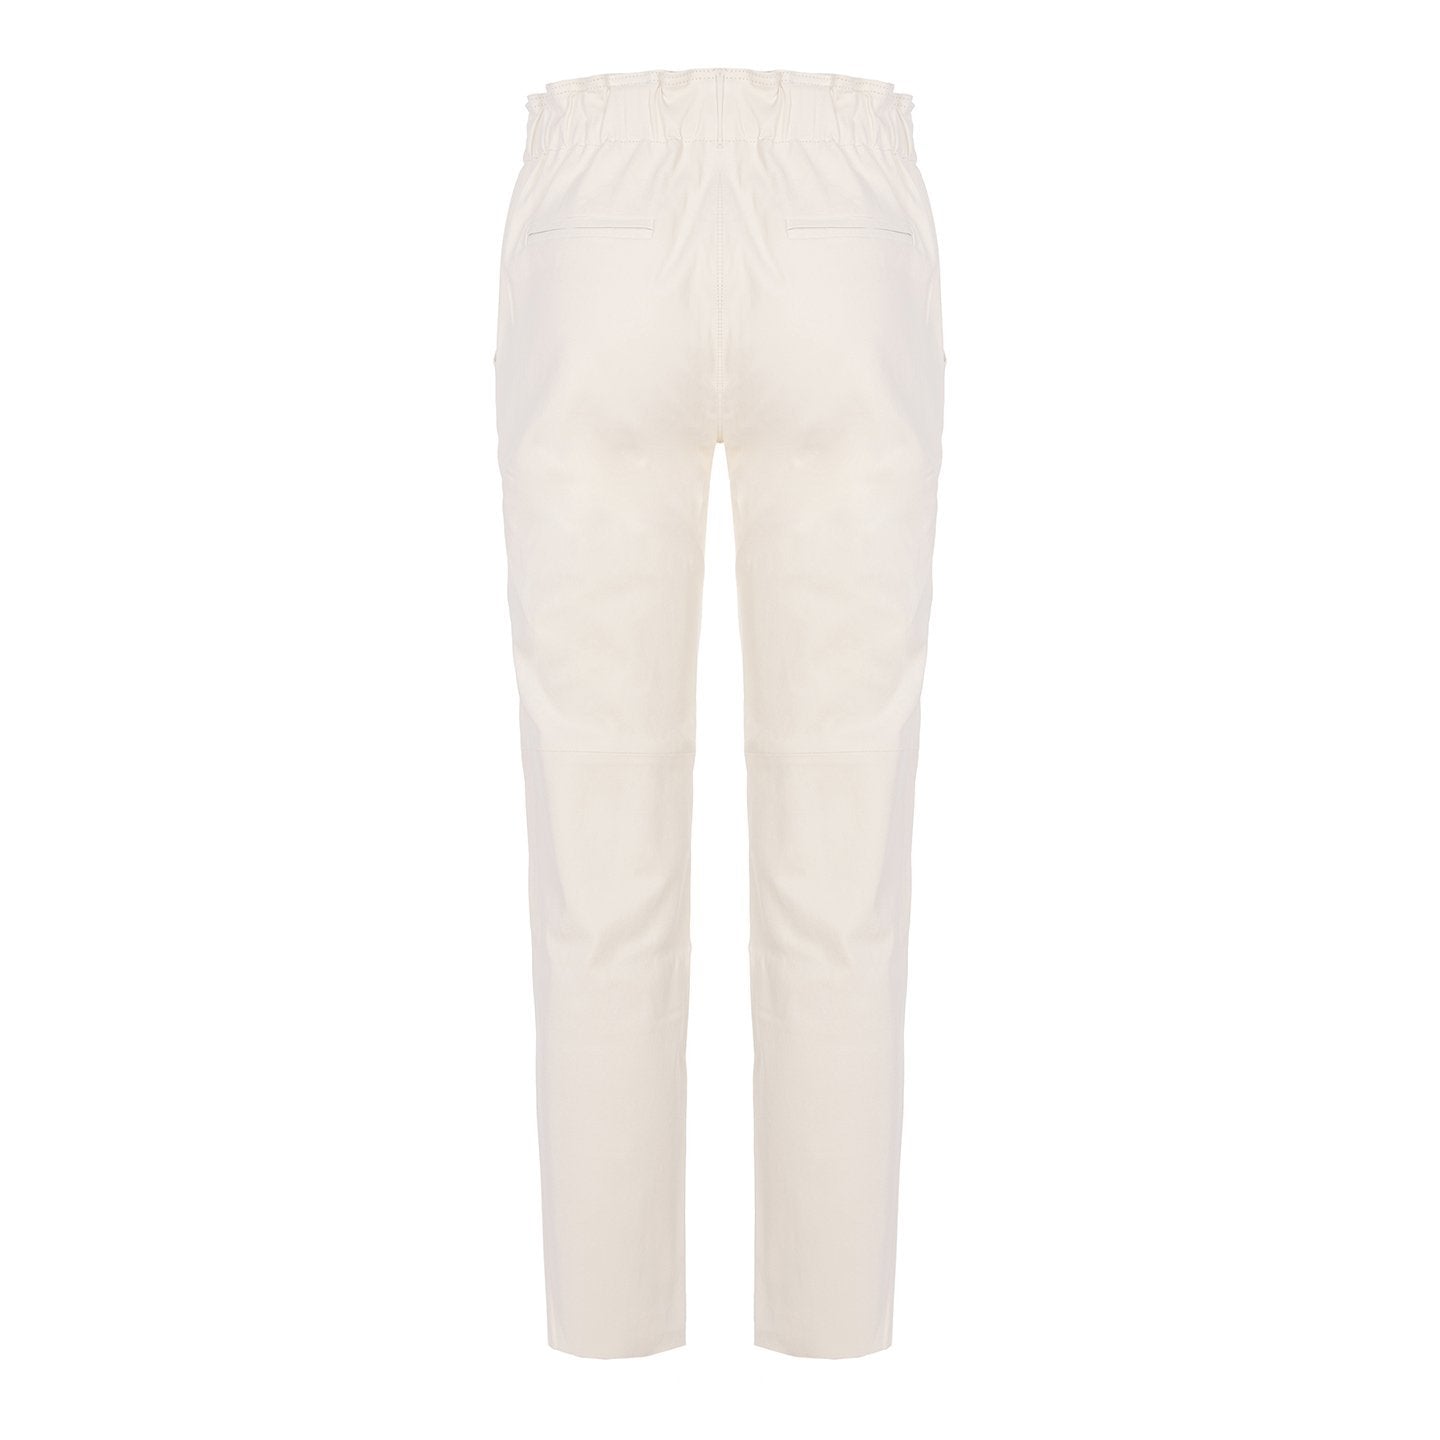 Pantalones de cuero blanco de diseño de Mon&Pau